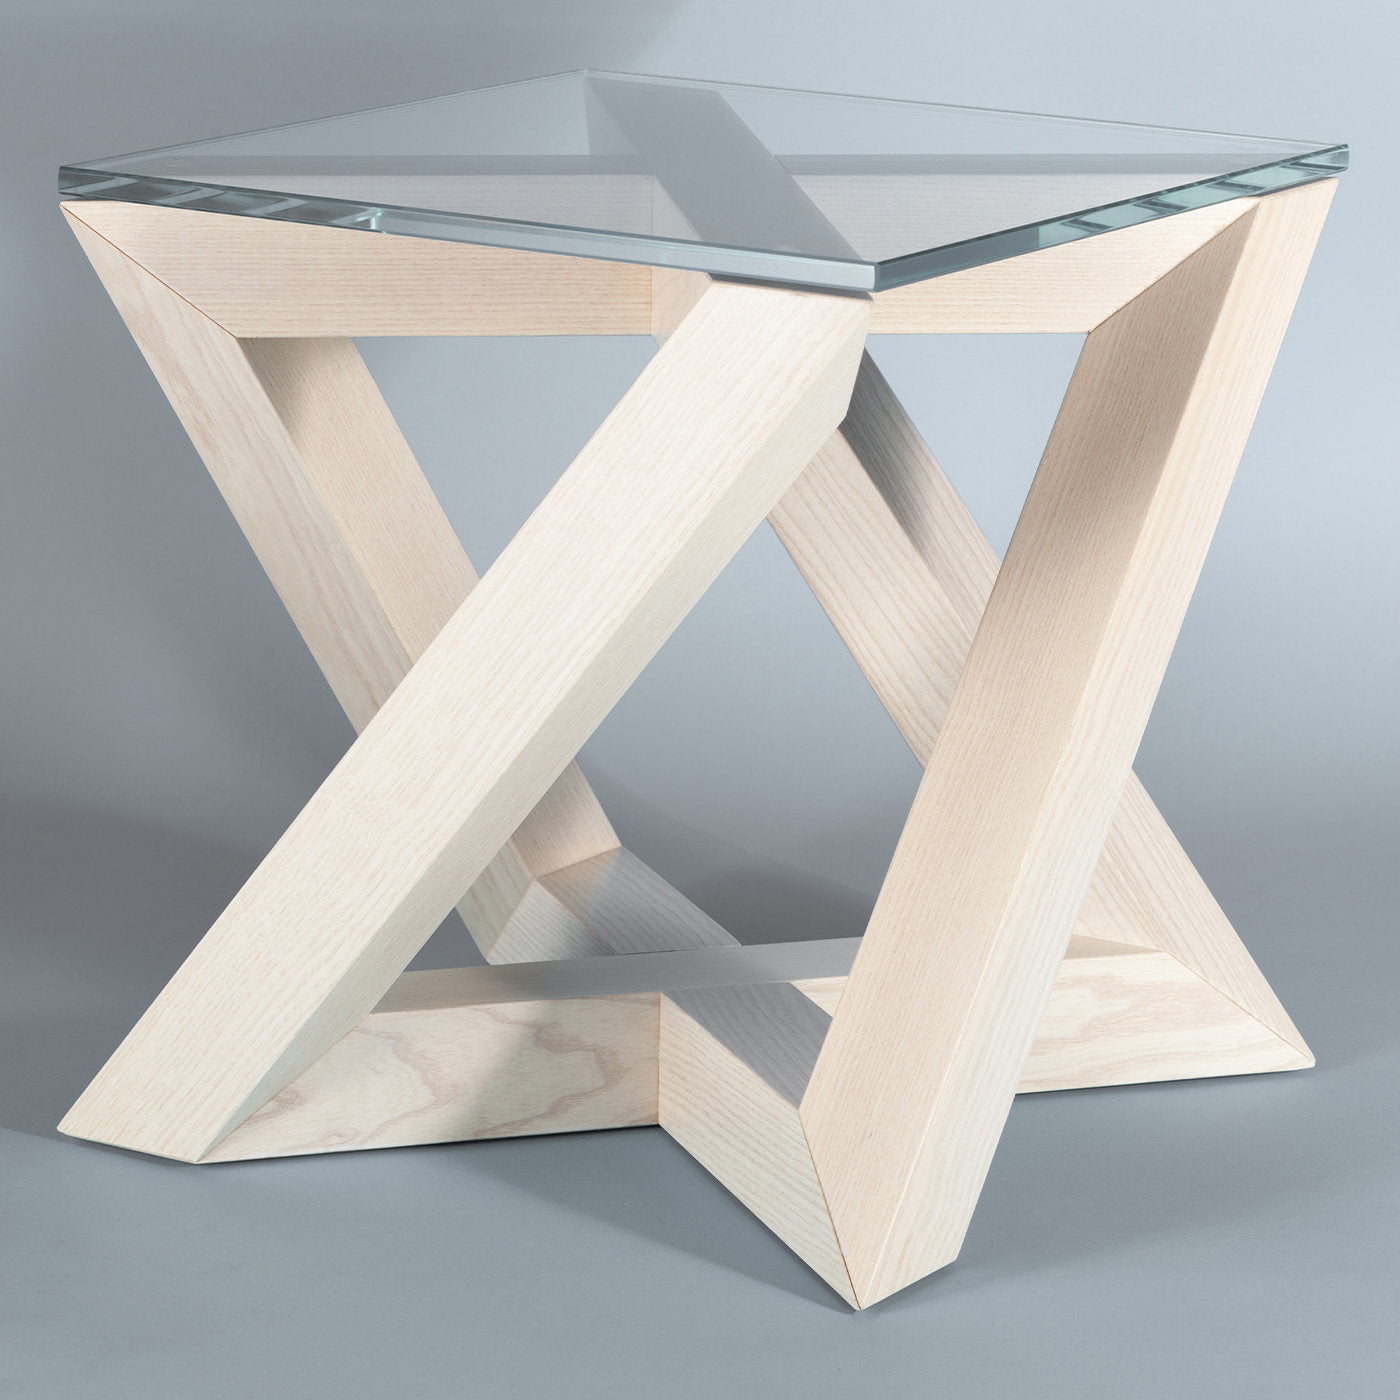 RK Side Table #3 by Antonio Saporito - Alternative view 2